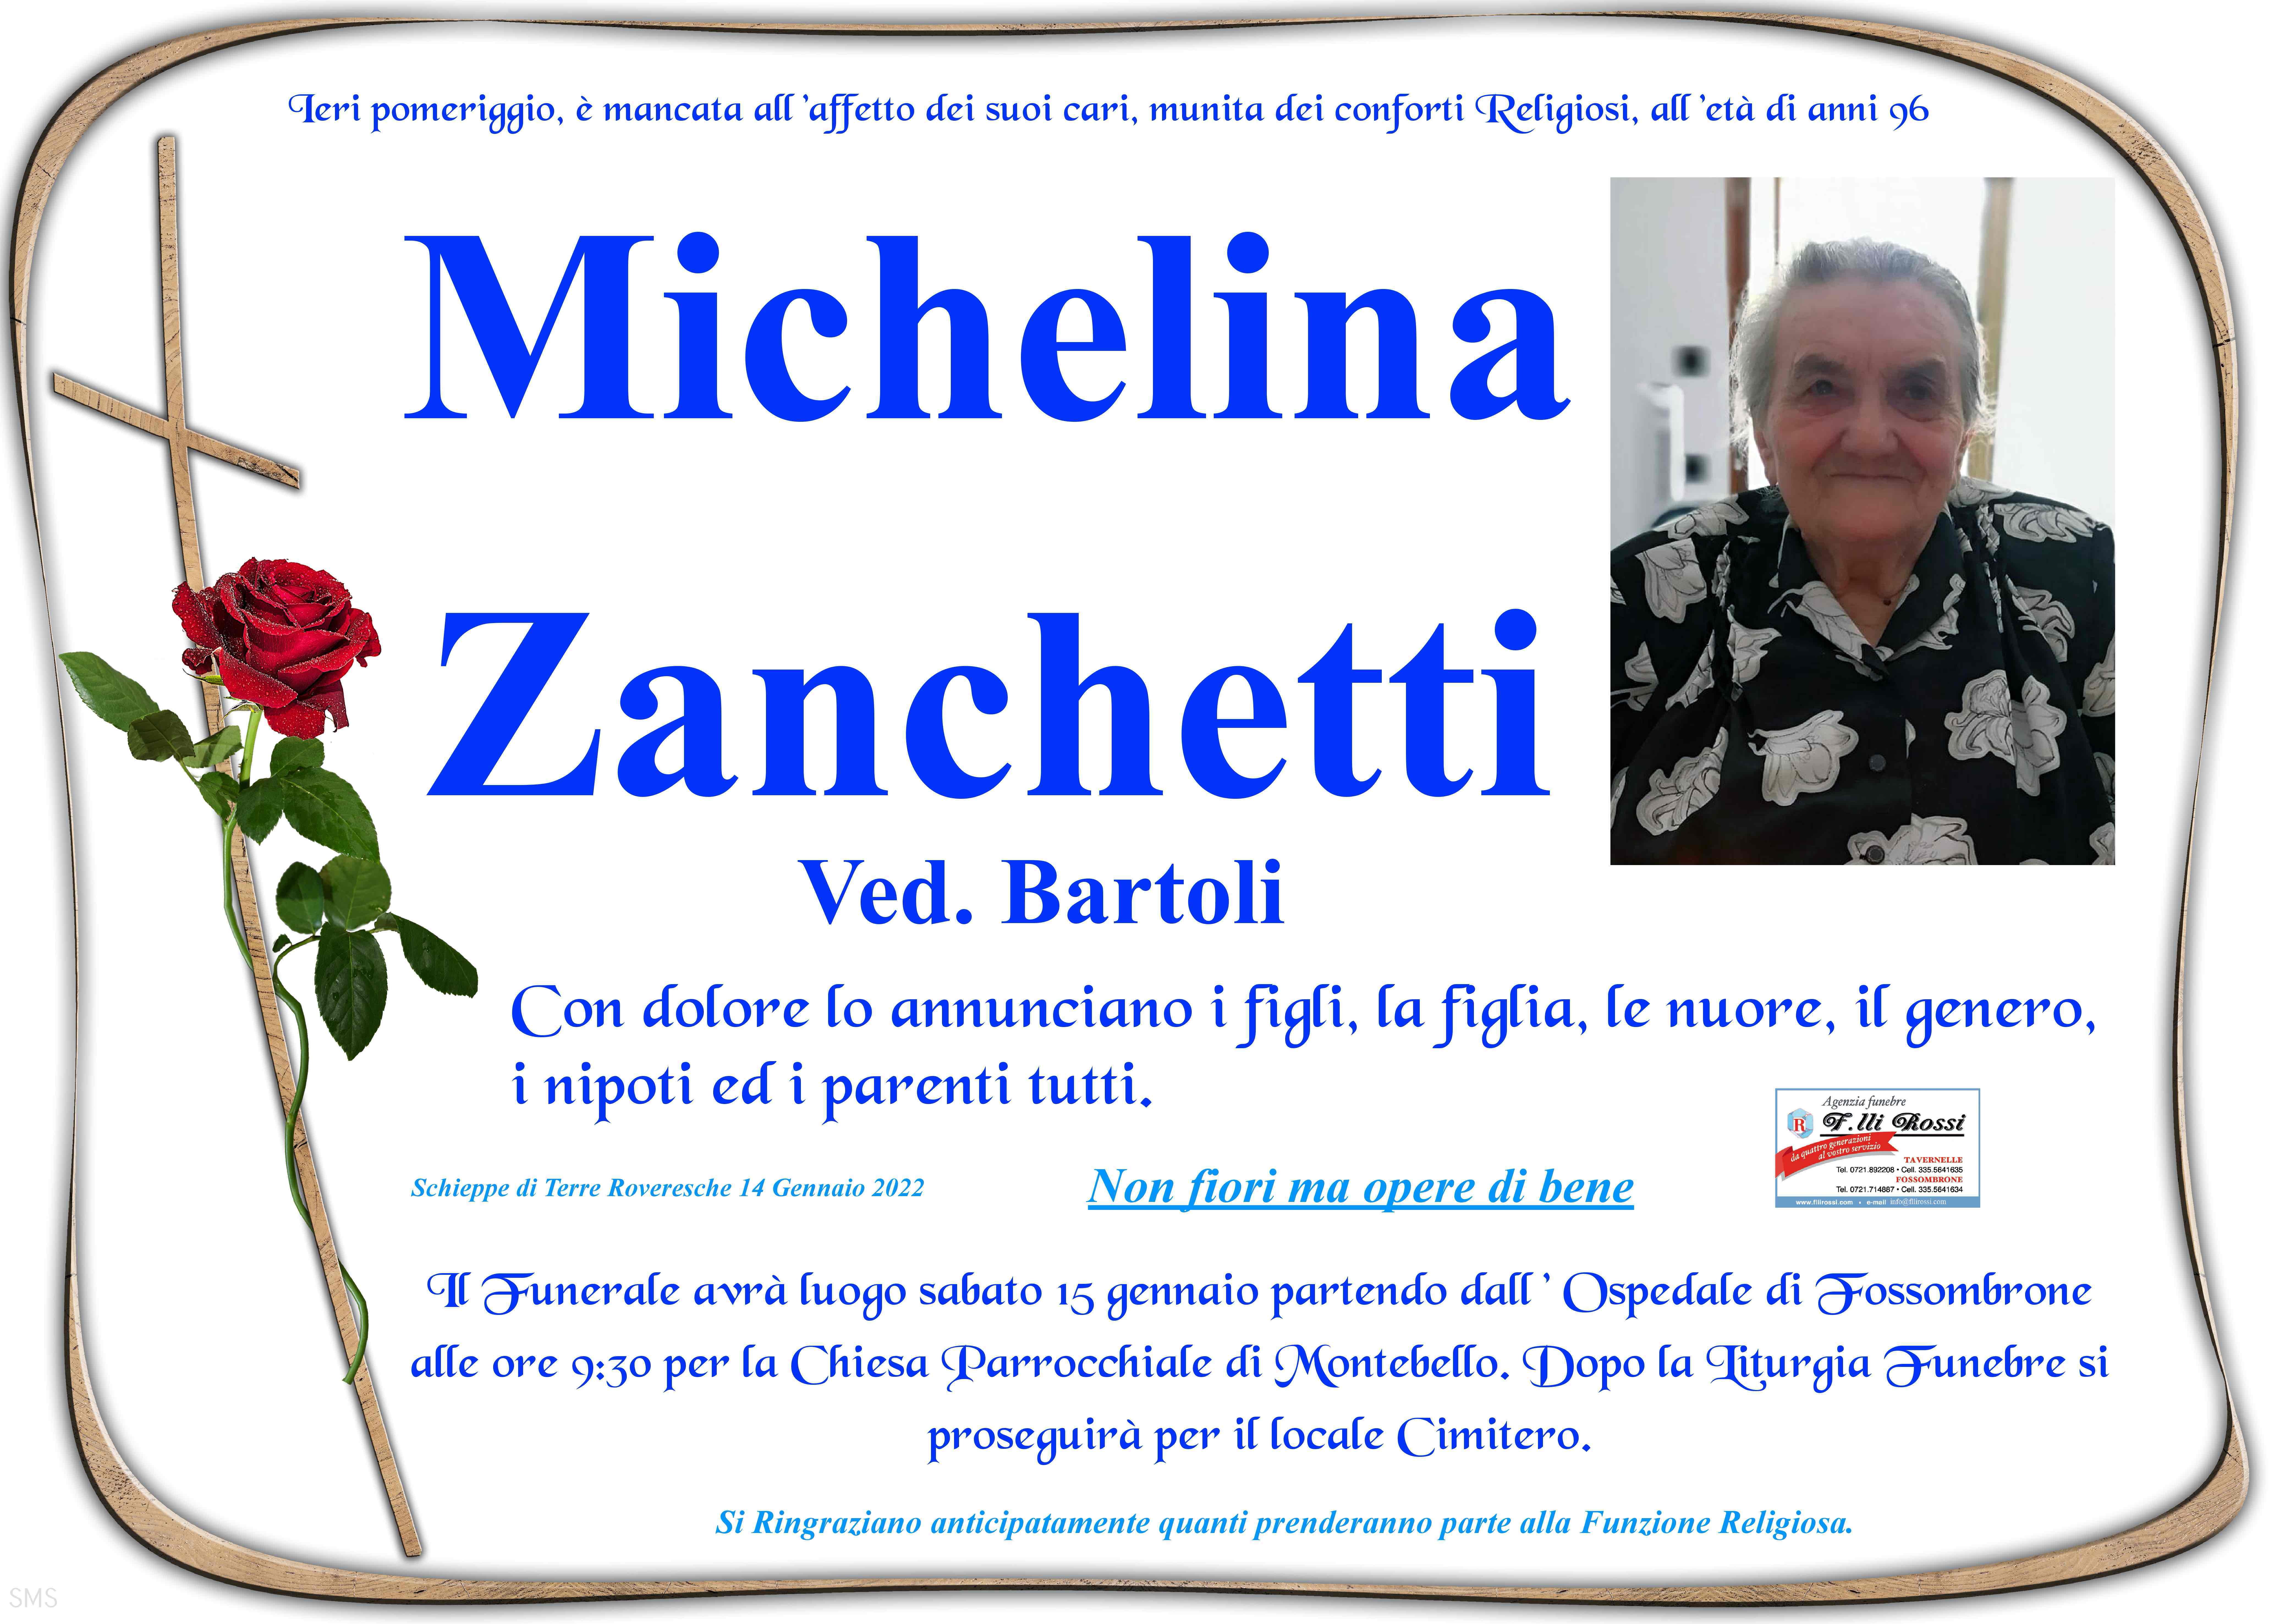 Michelina Zanchetti